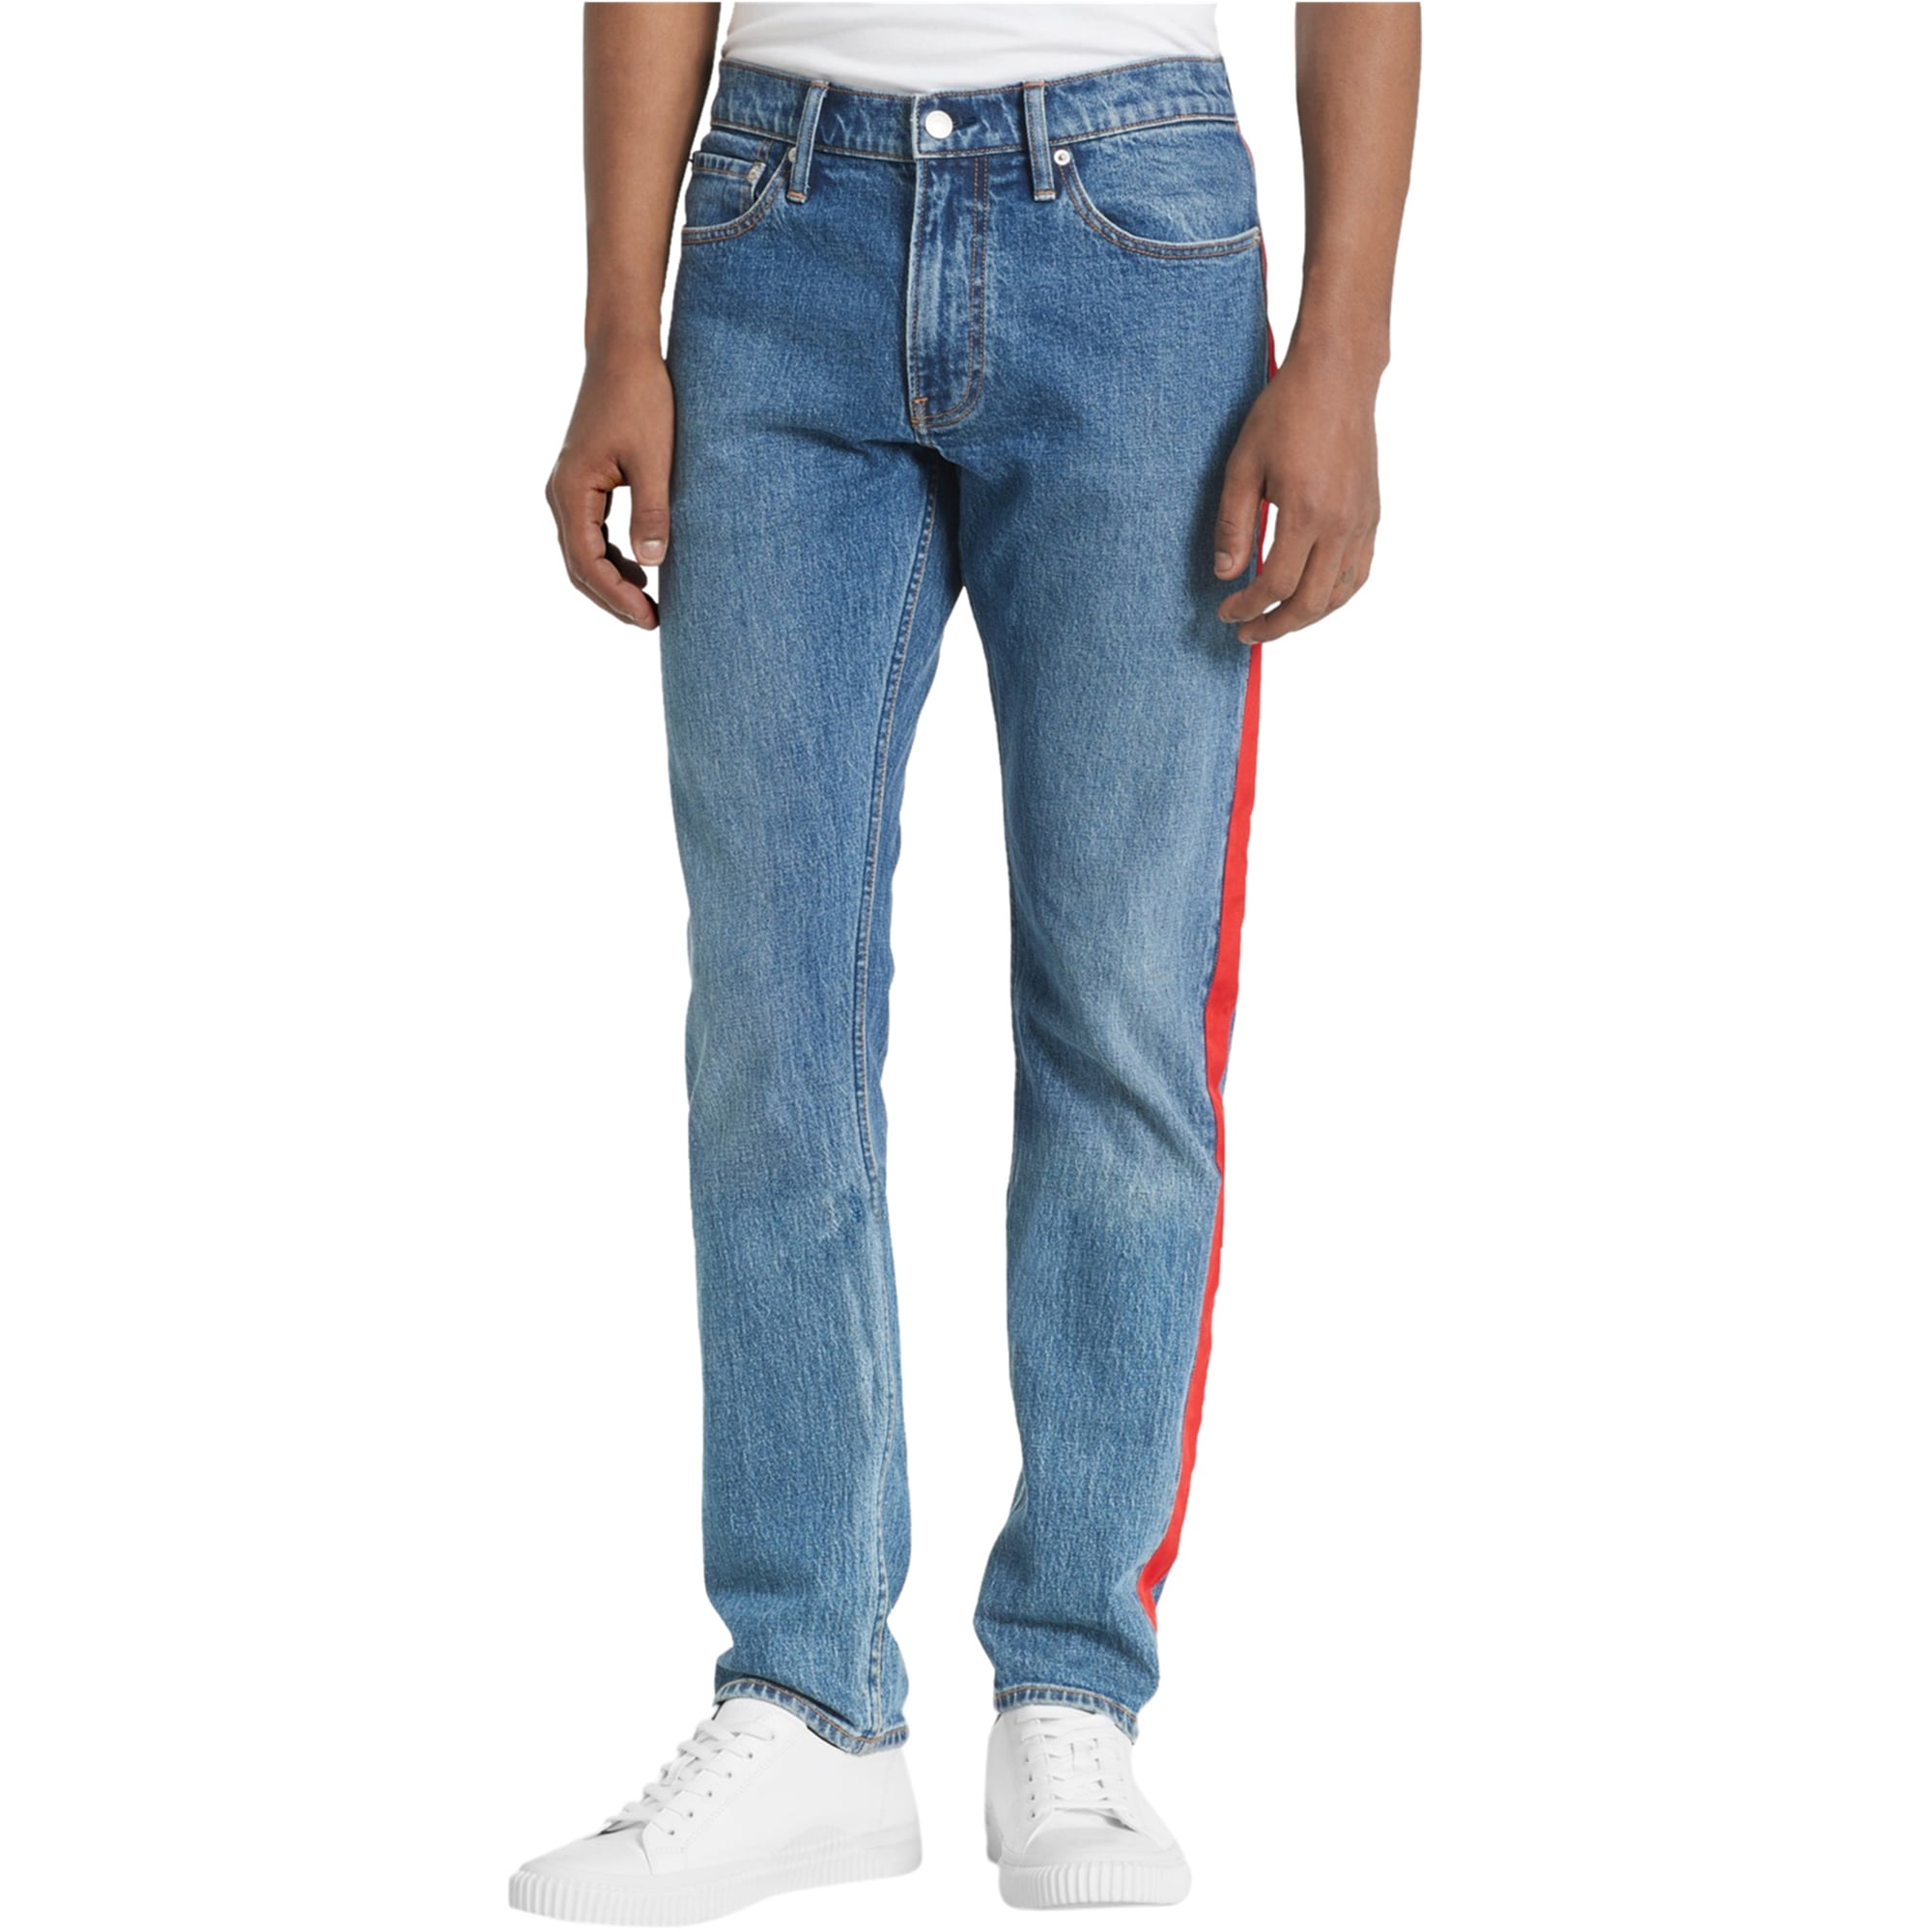 Stripe 32L 34W Jeans, Blue, x Fit Mens Slim Klein Calvin Side